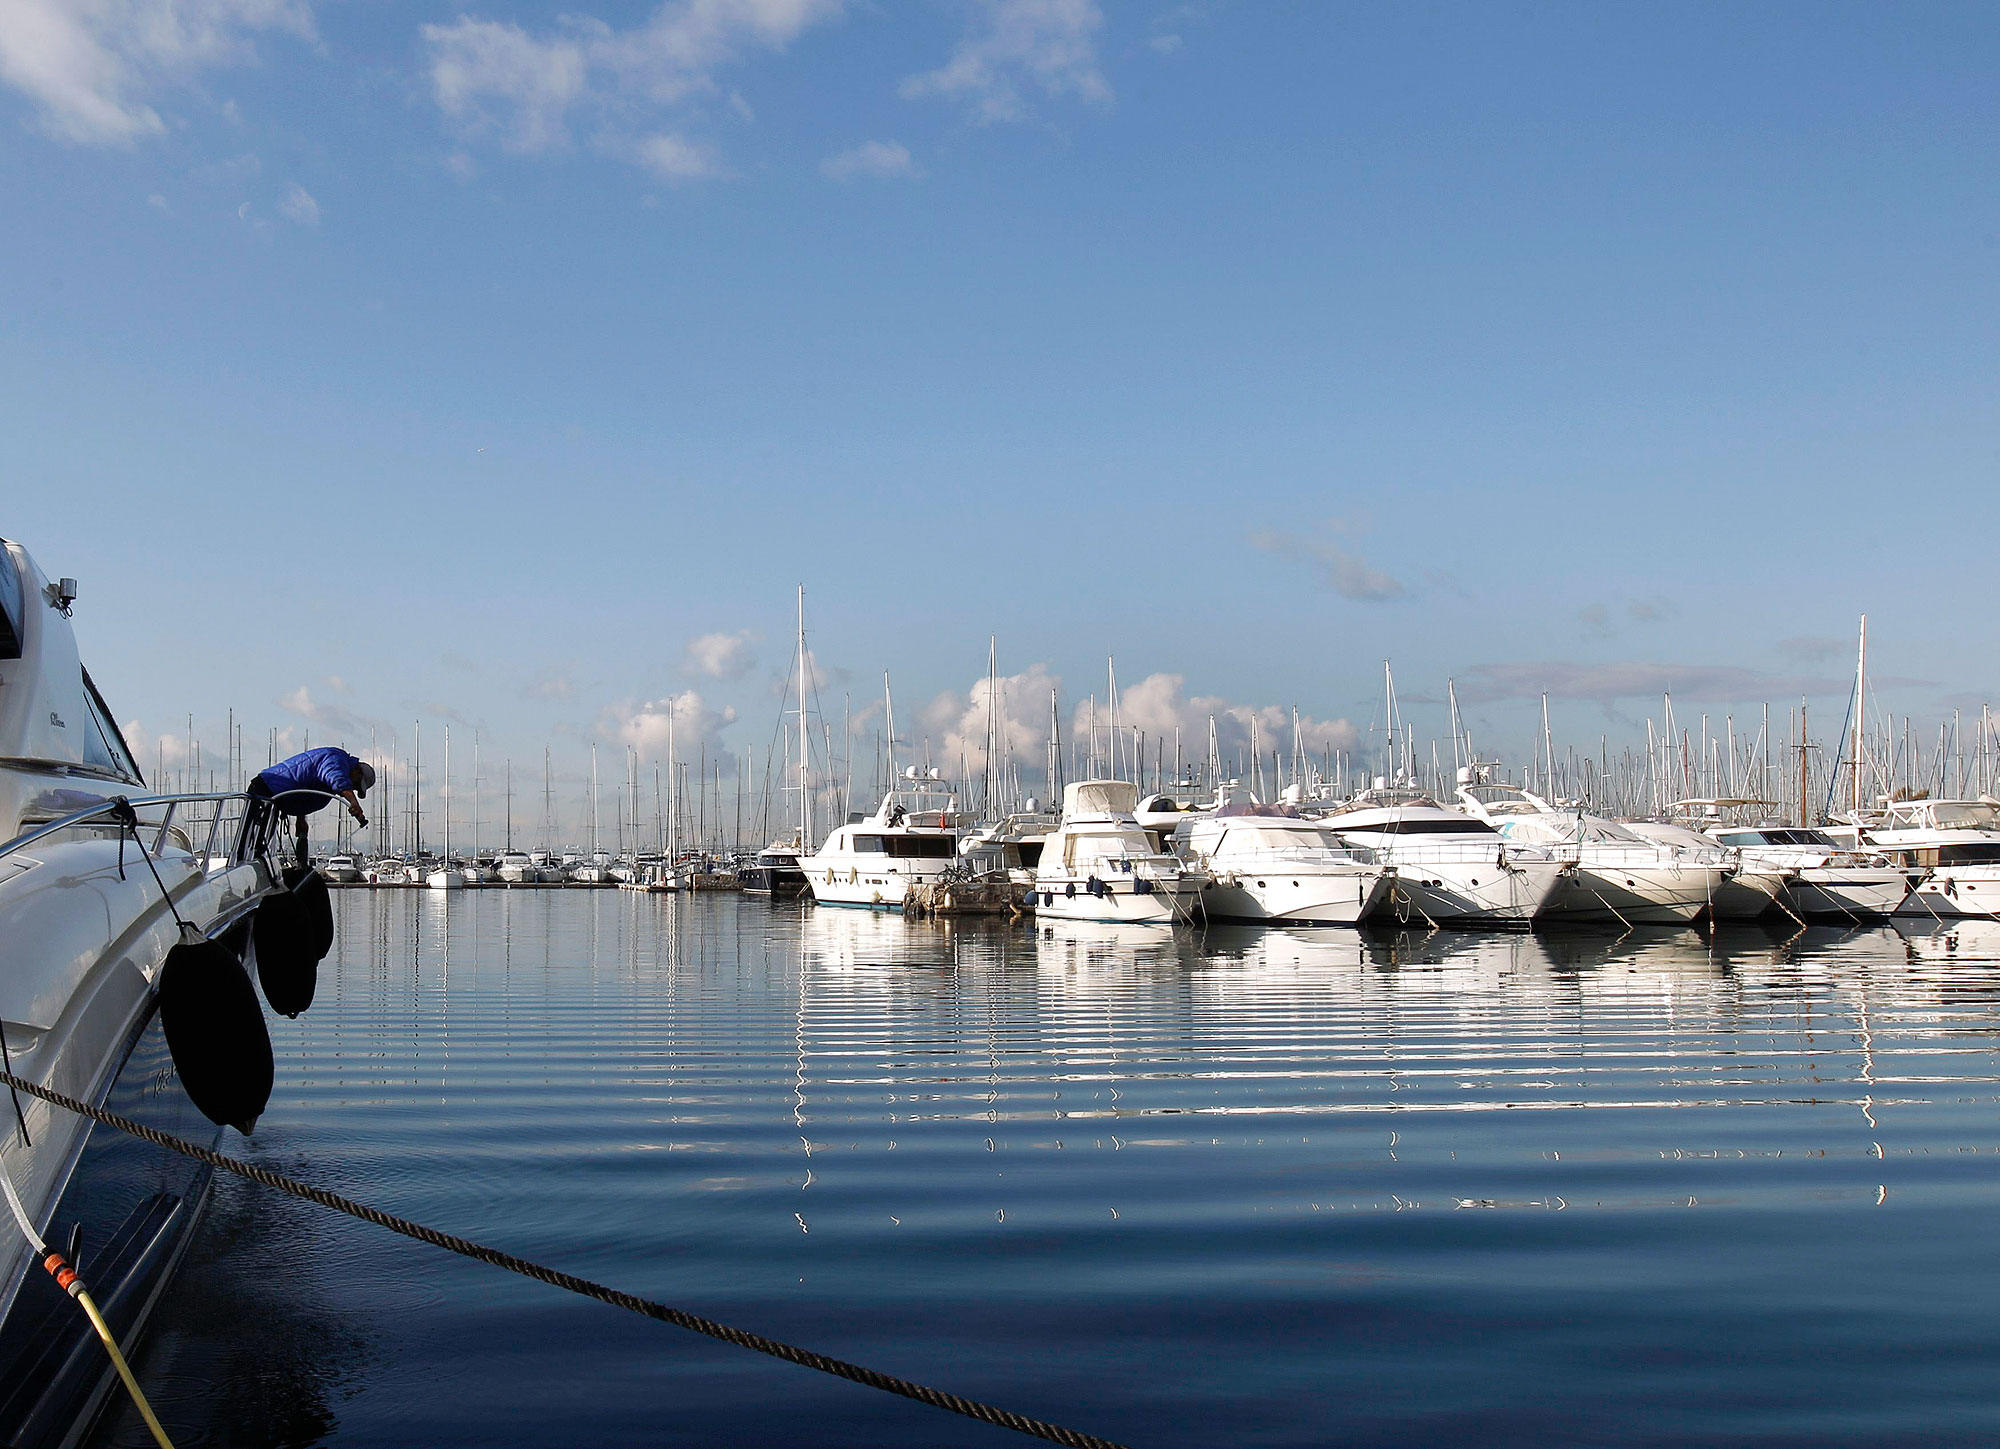 Hellastat: Μείωση πωλήσεων στα ναυτιλιακά και βιομηχανικά είδη το 2011